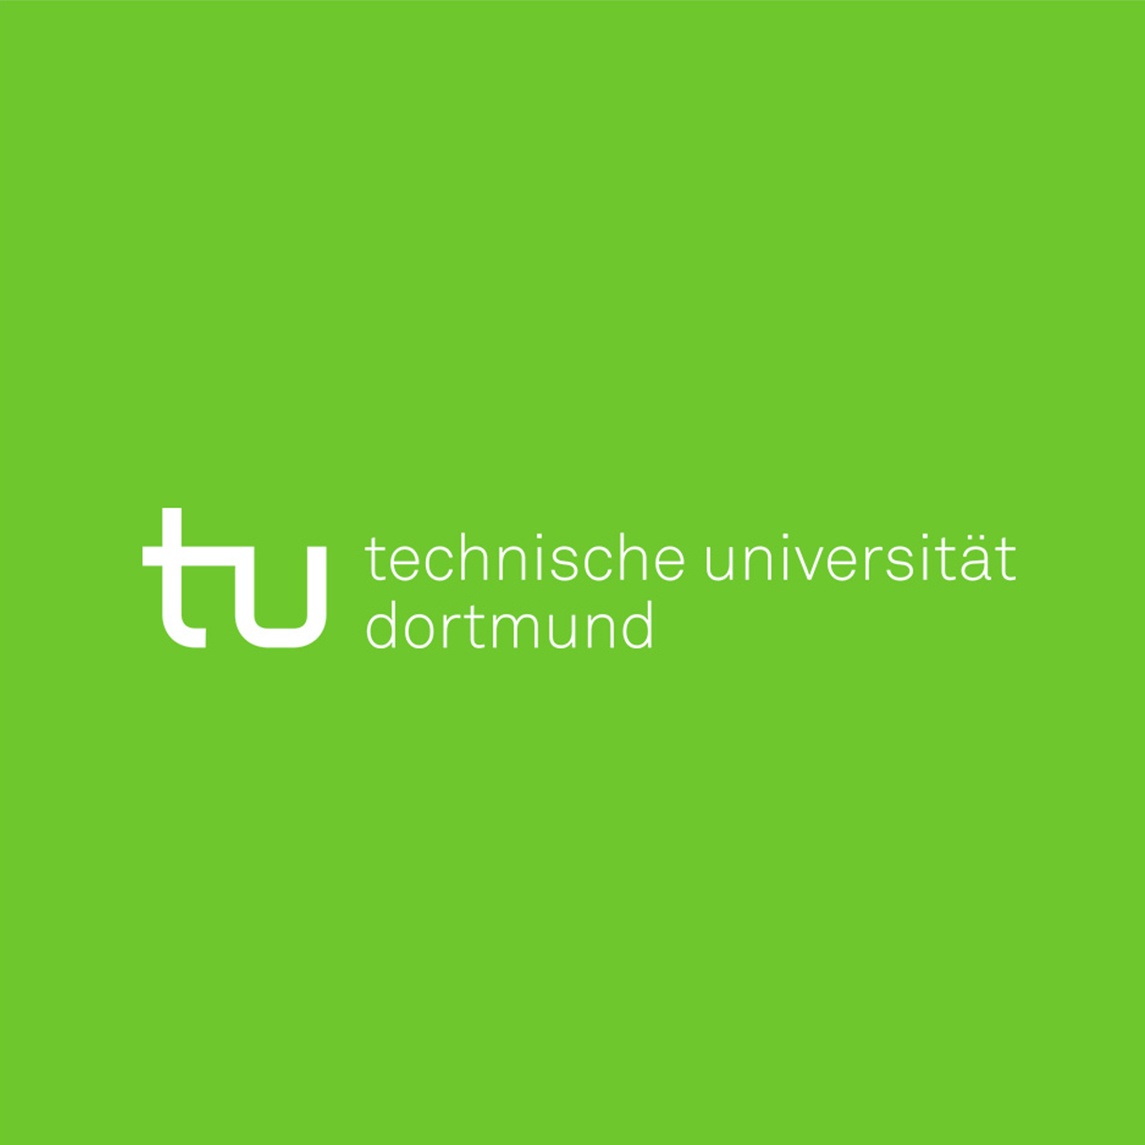 Wacom for Education esignature Technische Universitaet Dortmund